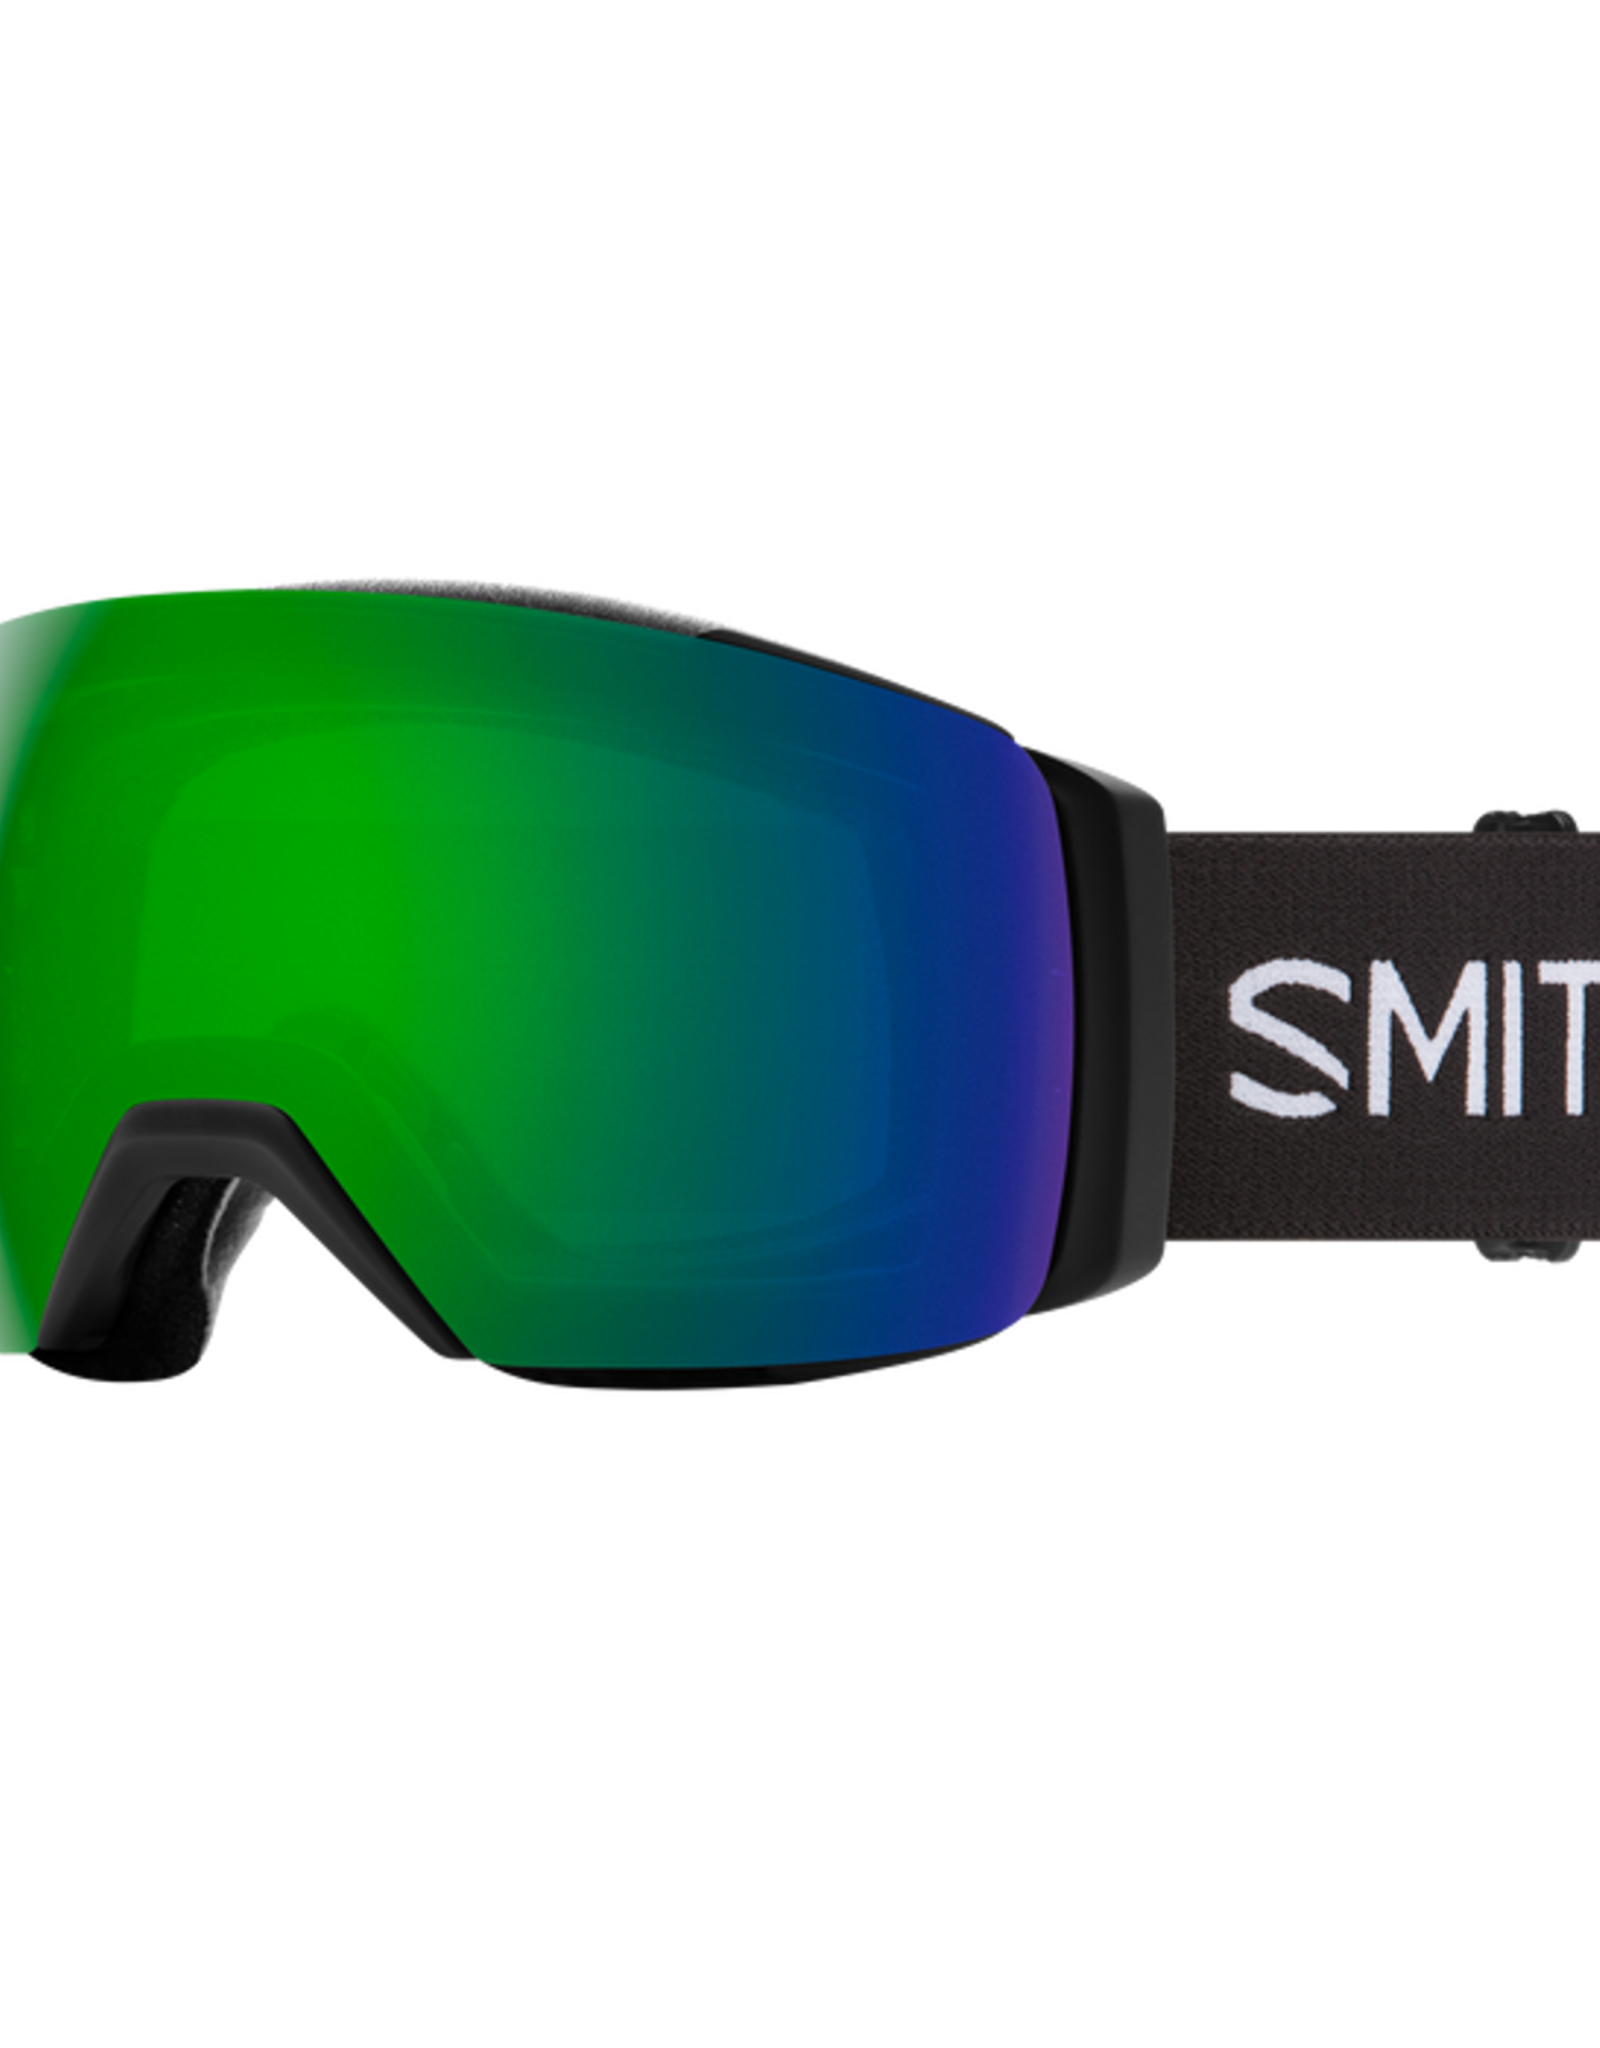 SMITH Smith I/O Mag Black w Everyday Green Mirror & Storm Blue Sensor Mirror Lenses